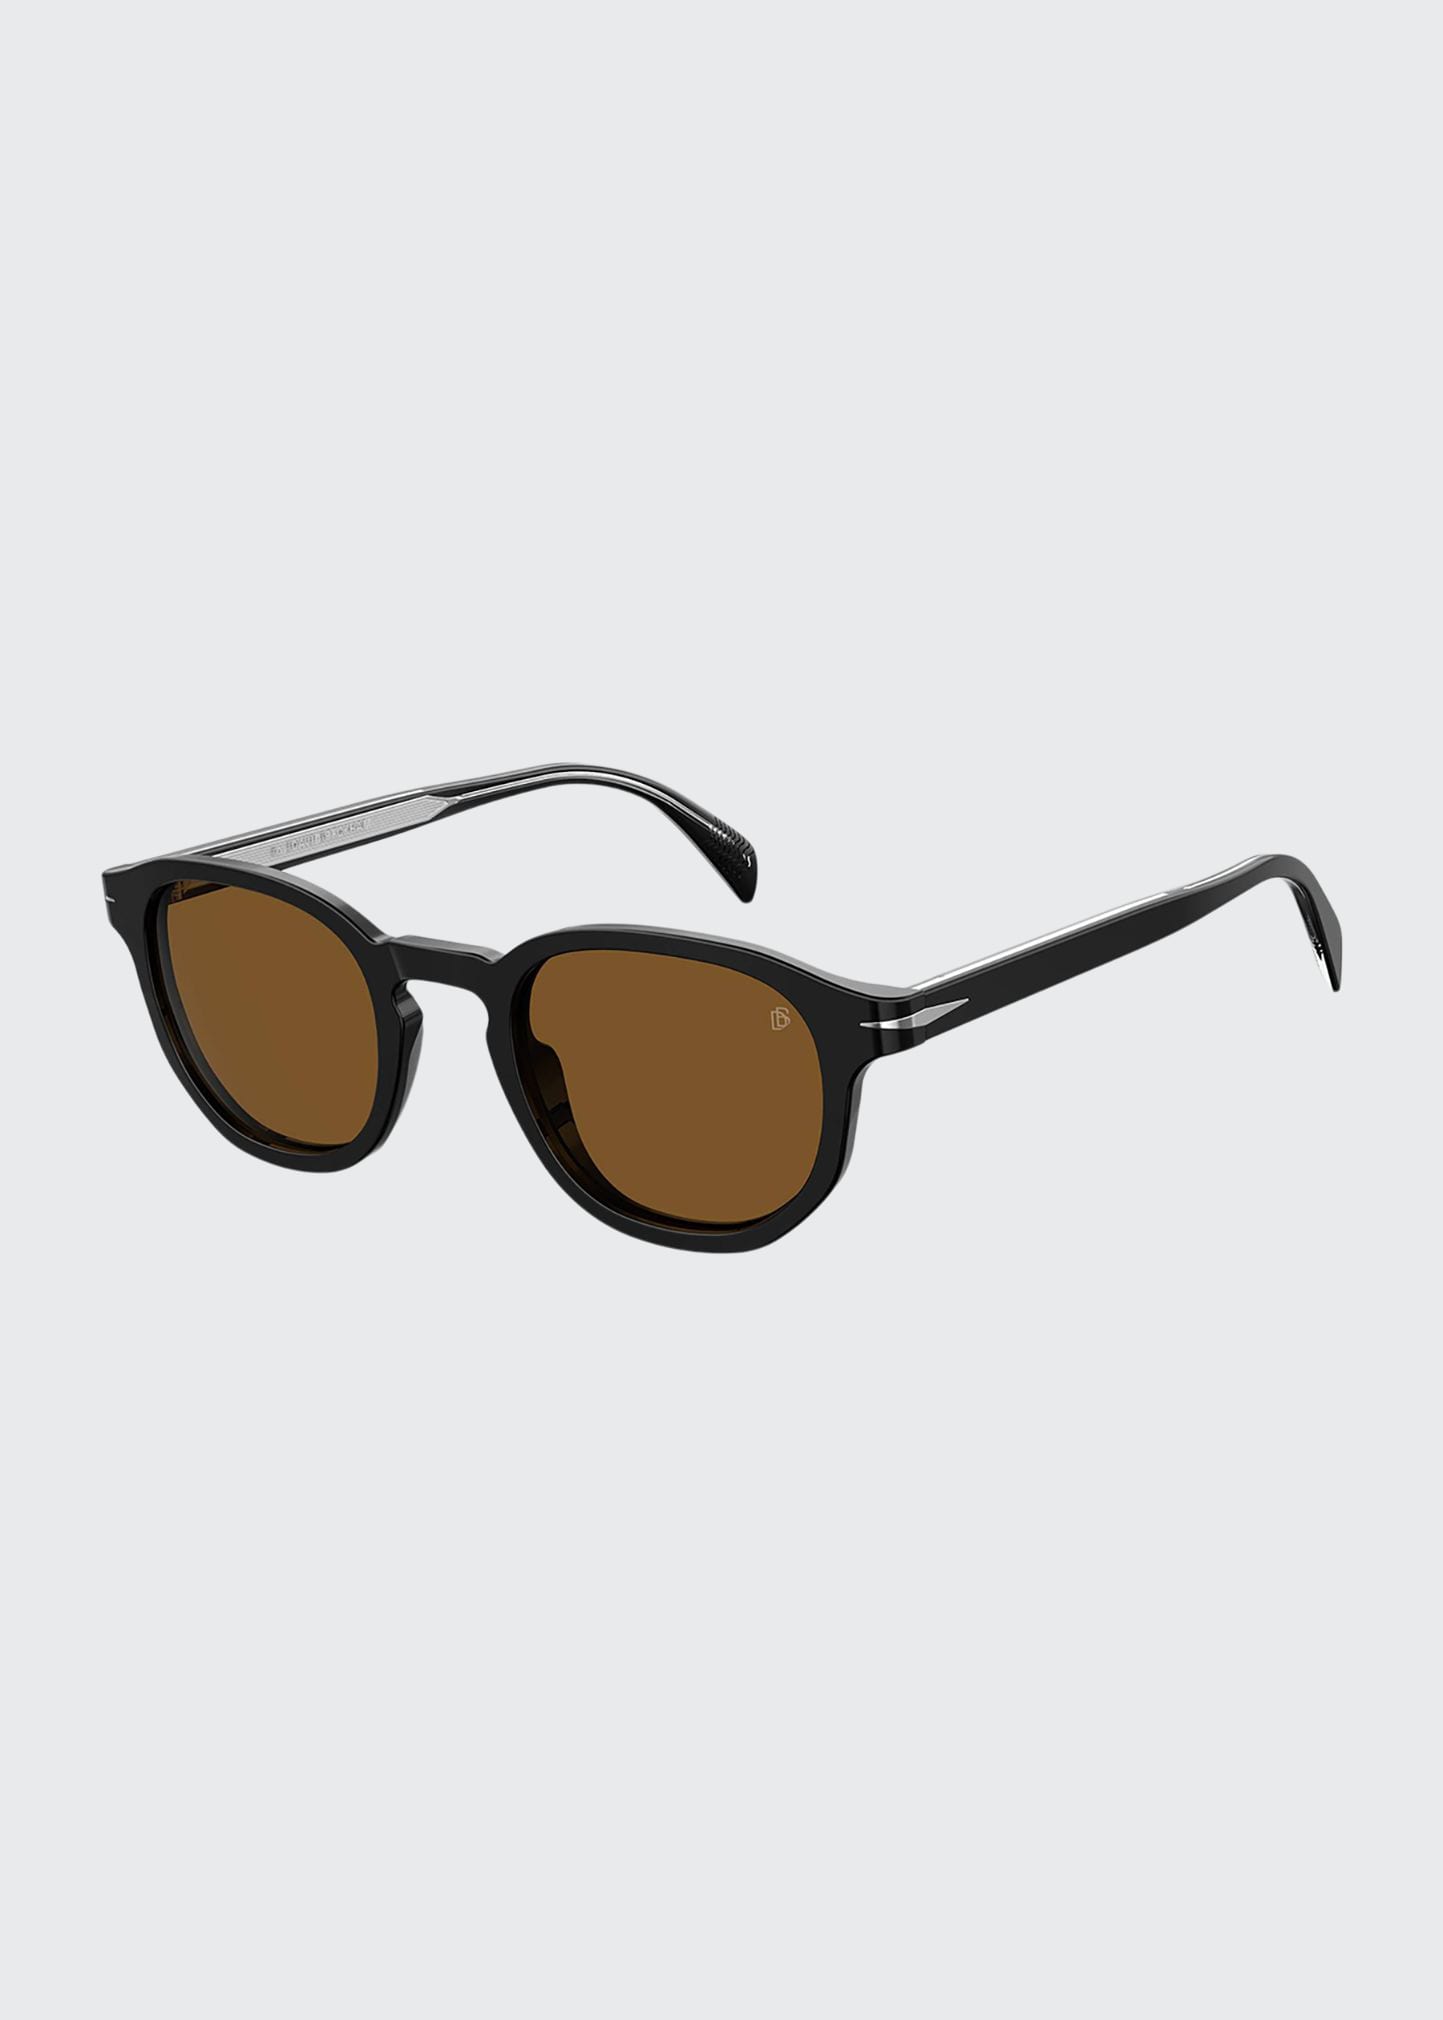 David Beckham Men's Round Acetate Sunglasses w/ Metal Detail